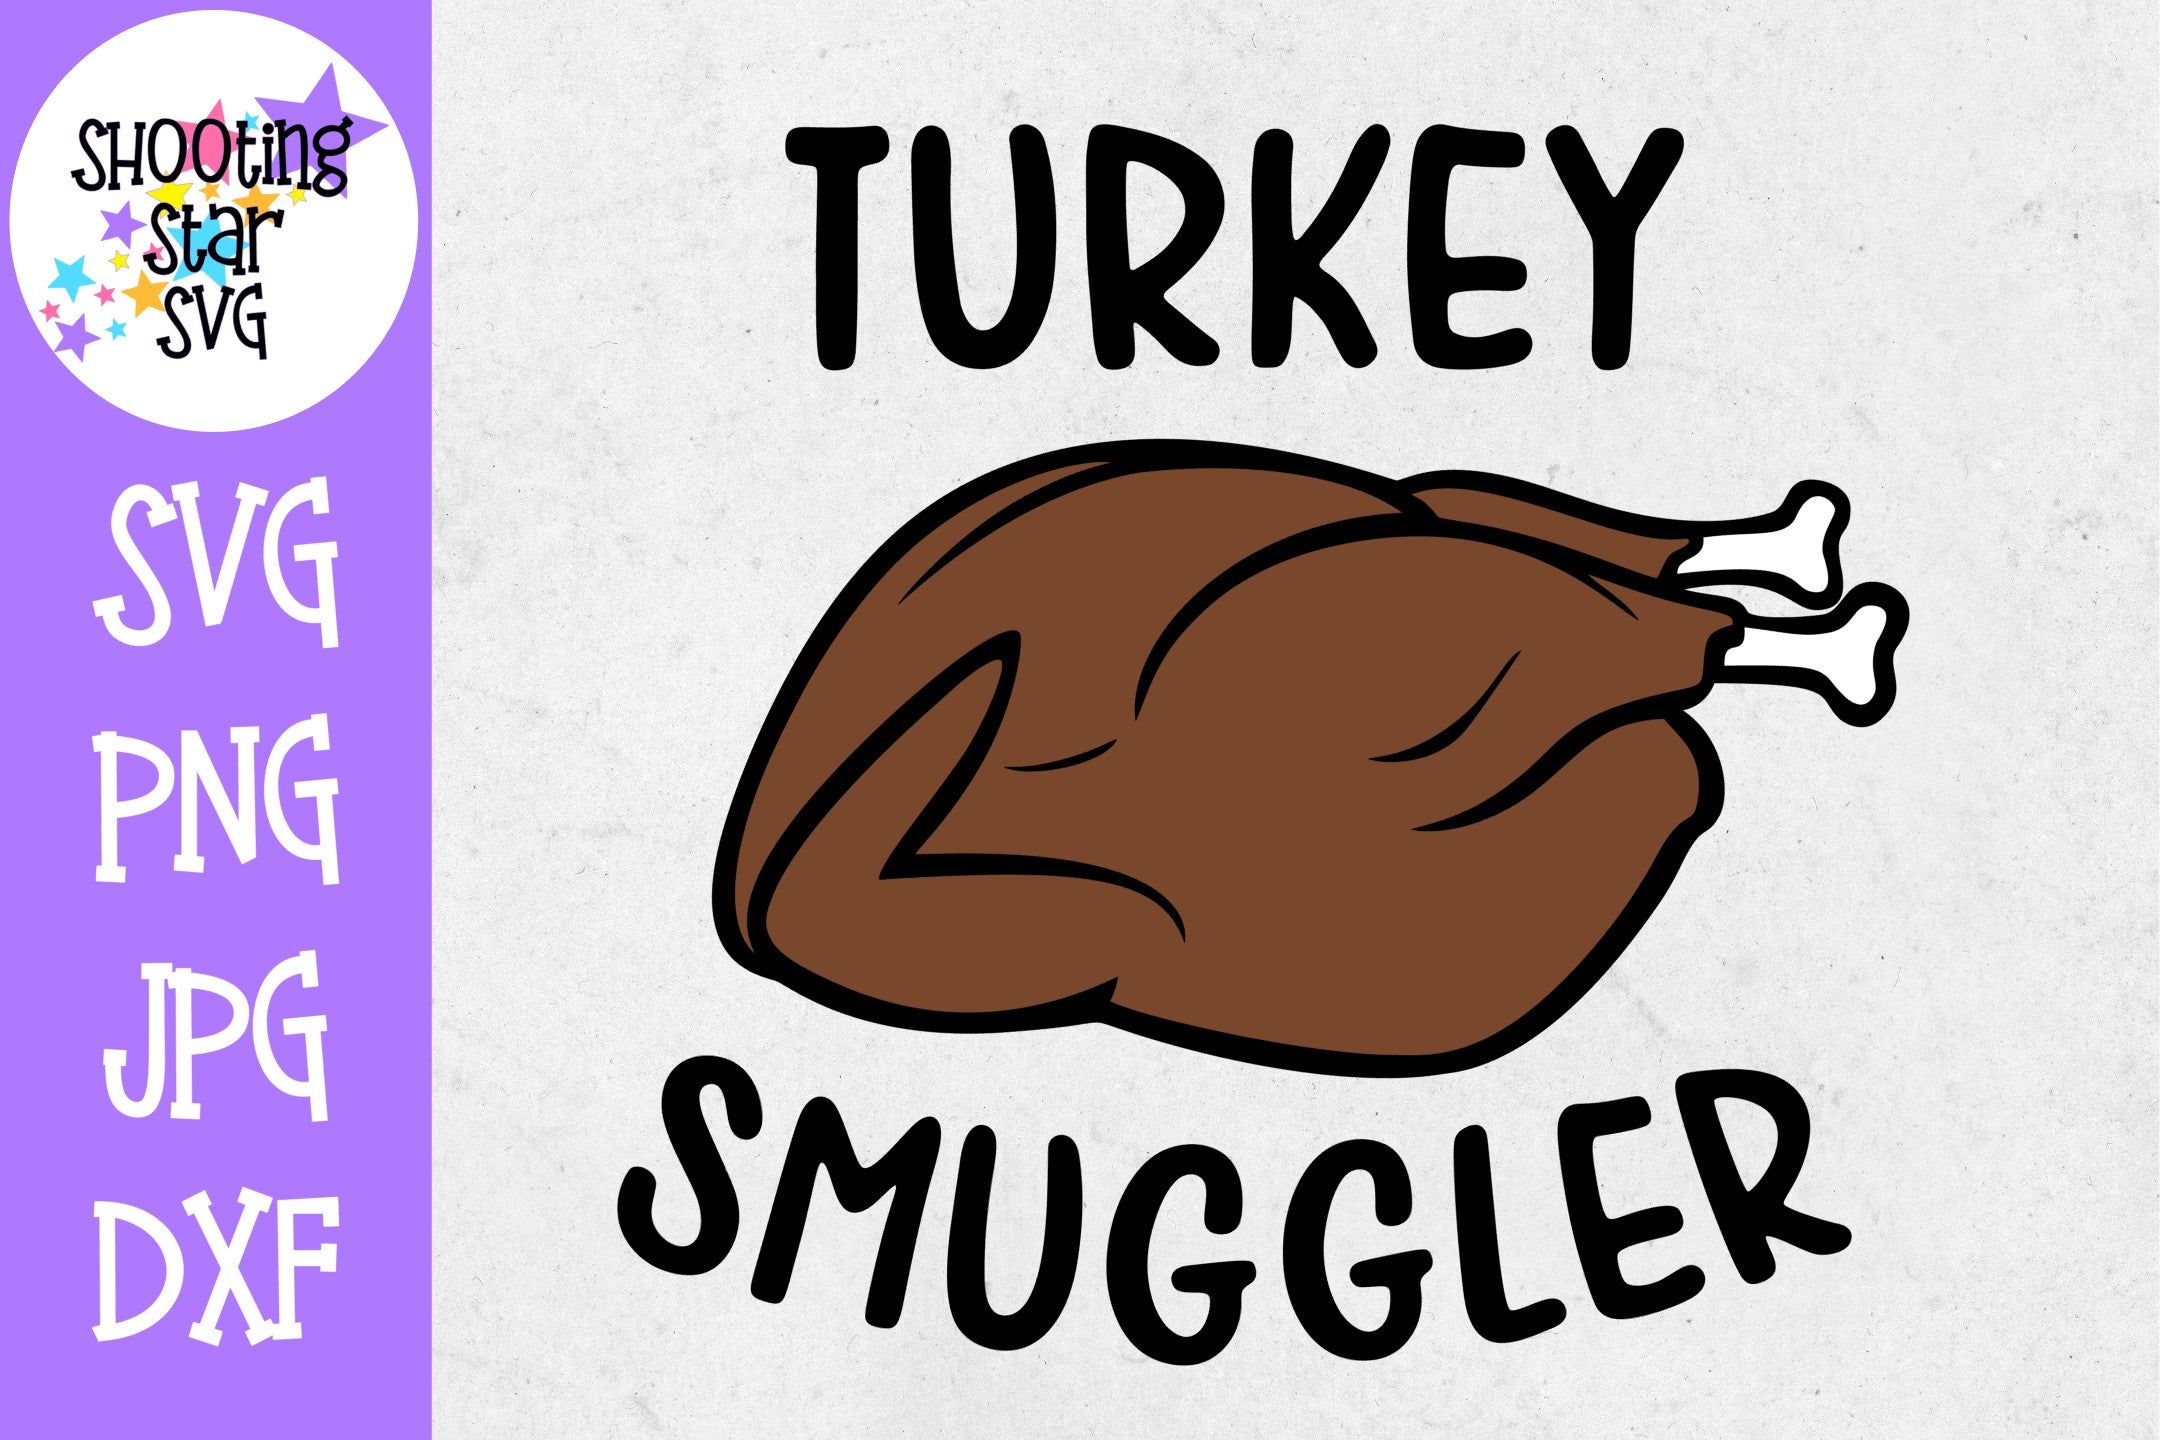 Turkey Smuggler - Pregnancy SVG - Maternity SVG